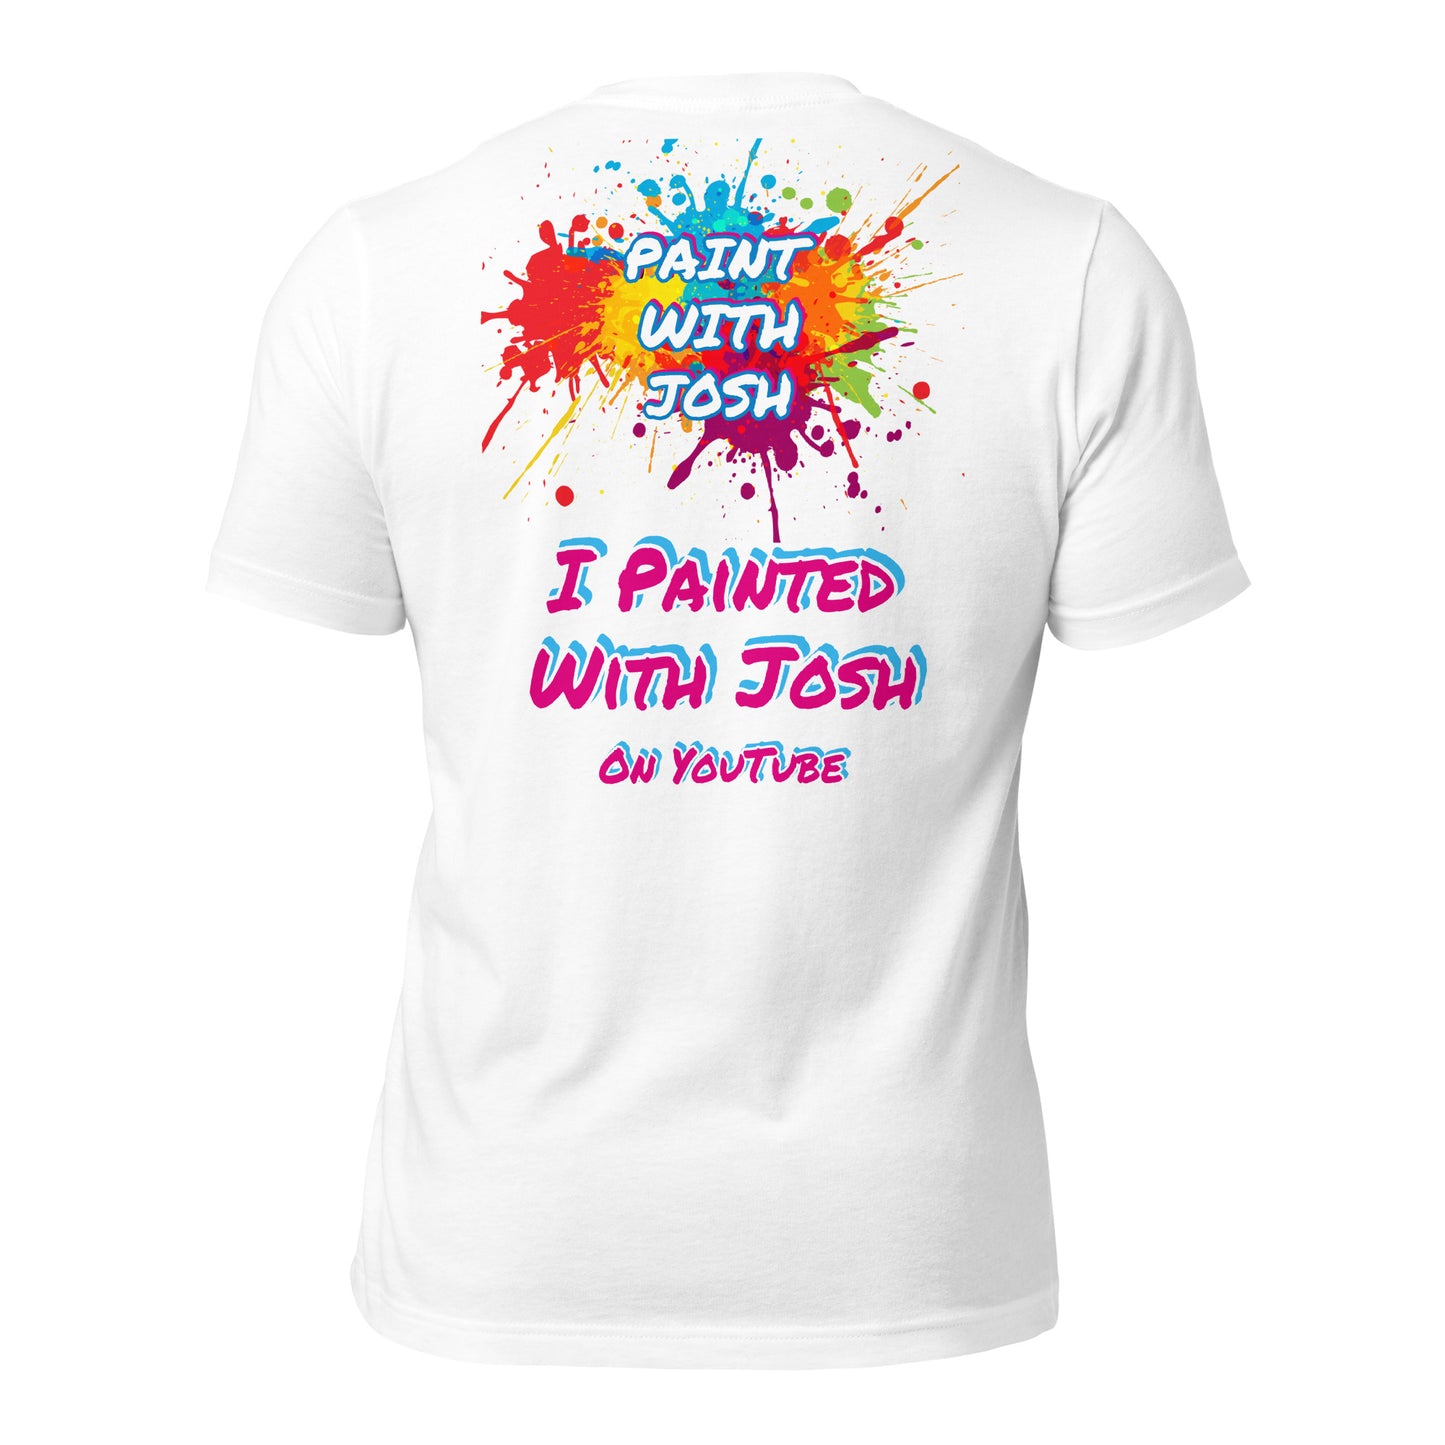 Clothing - I Painted With Josh on YouTube Unisex t-shirt by PaintWithJosh